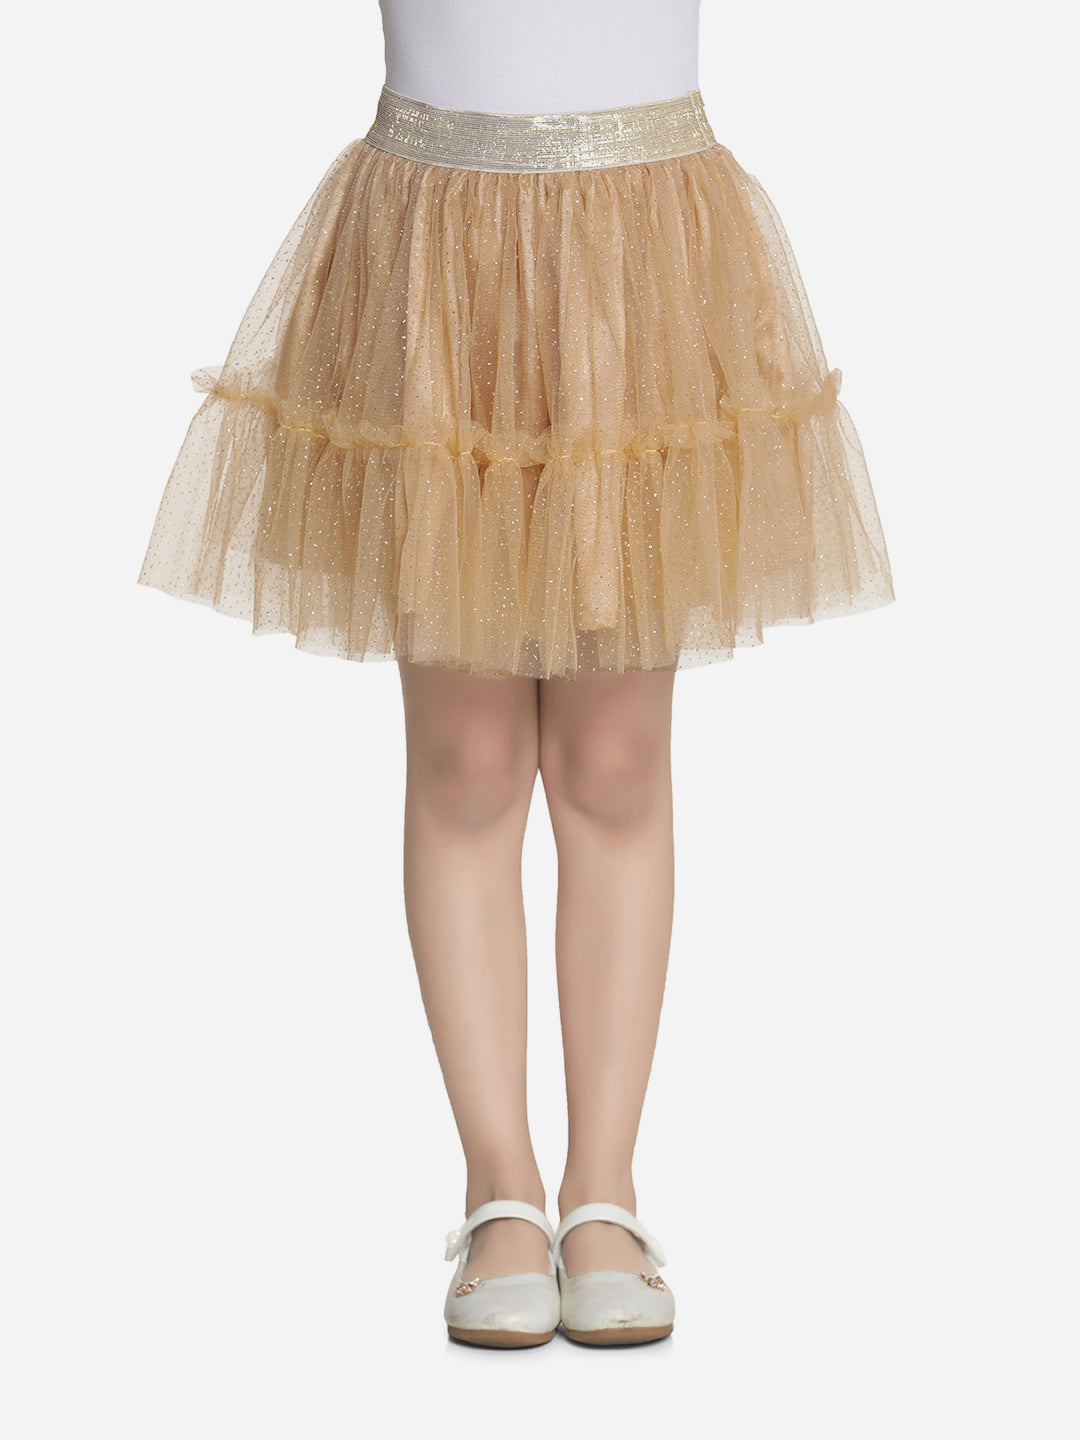 Girls Glitter Gold Net Skirt with Gold Elastic Waist